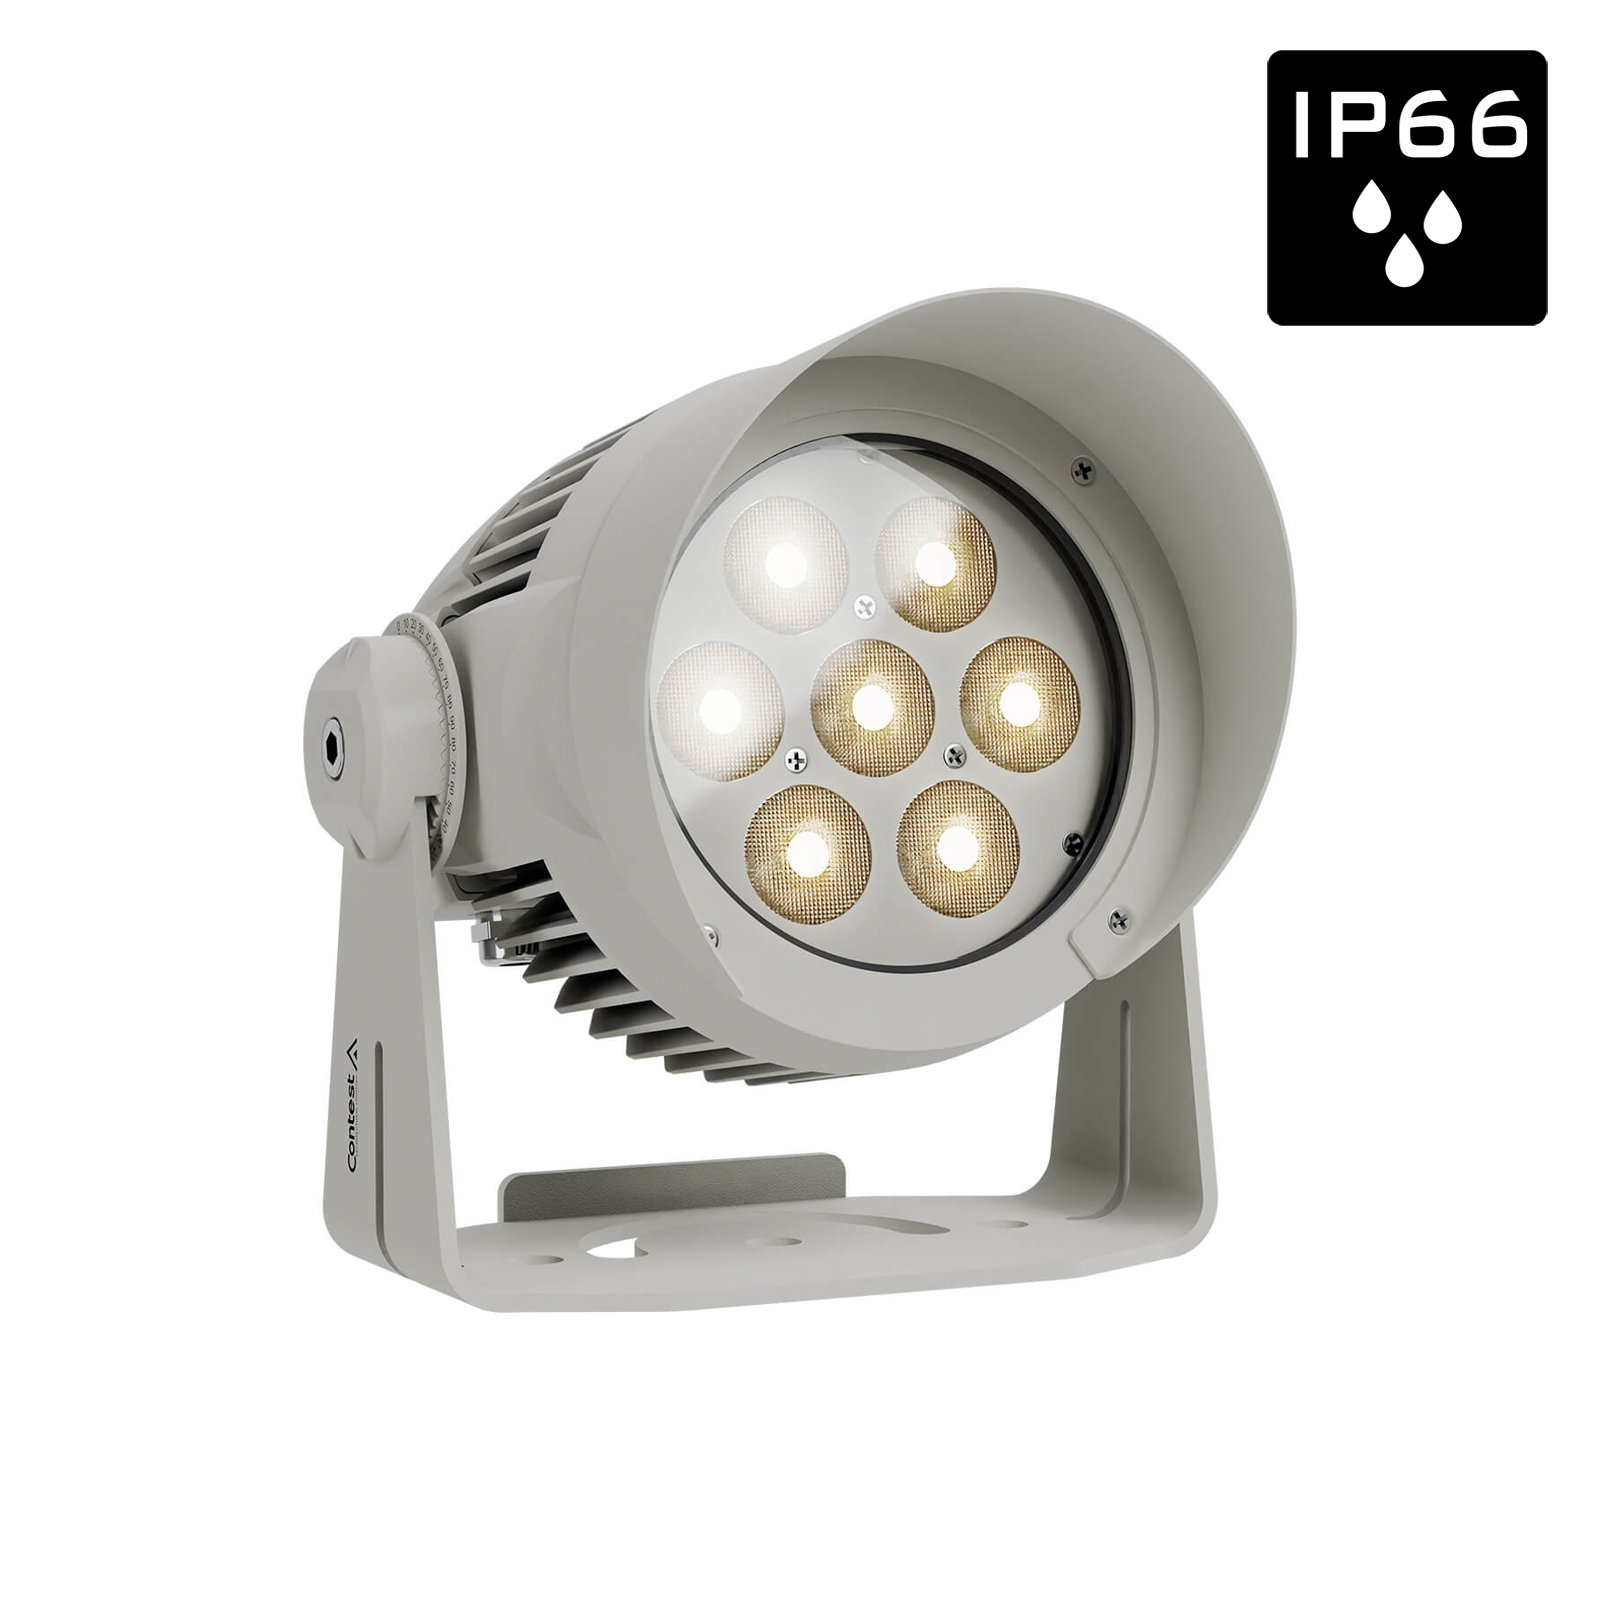 Architectural spotlight IP66 7x LEDs Dynamic White 27006000K 70W 25-